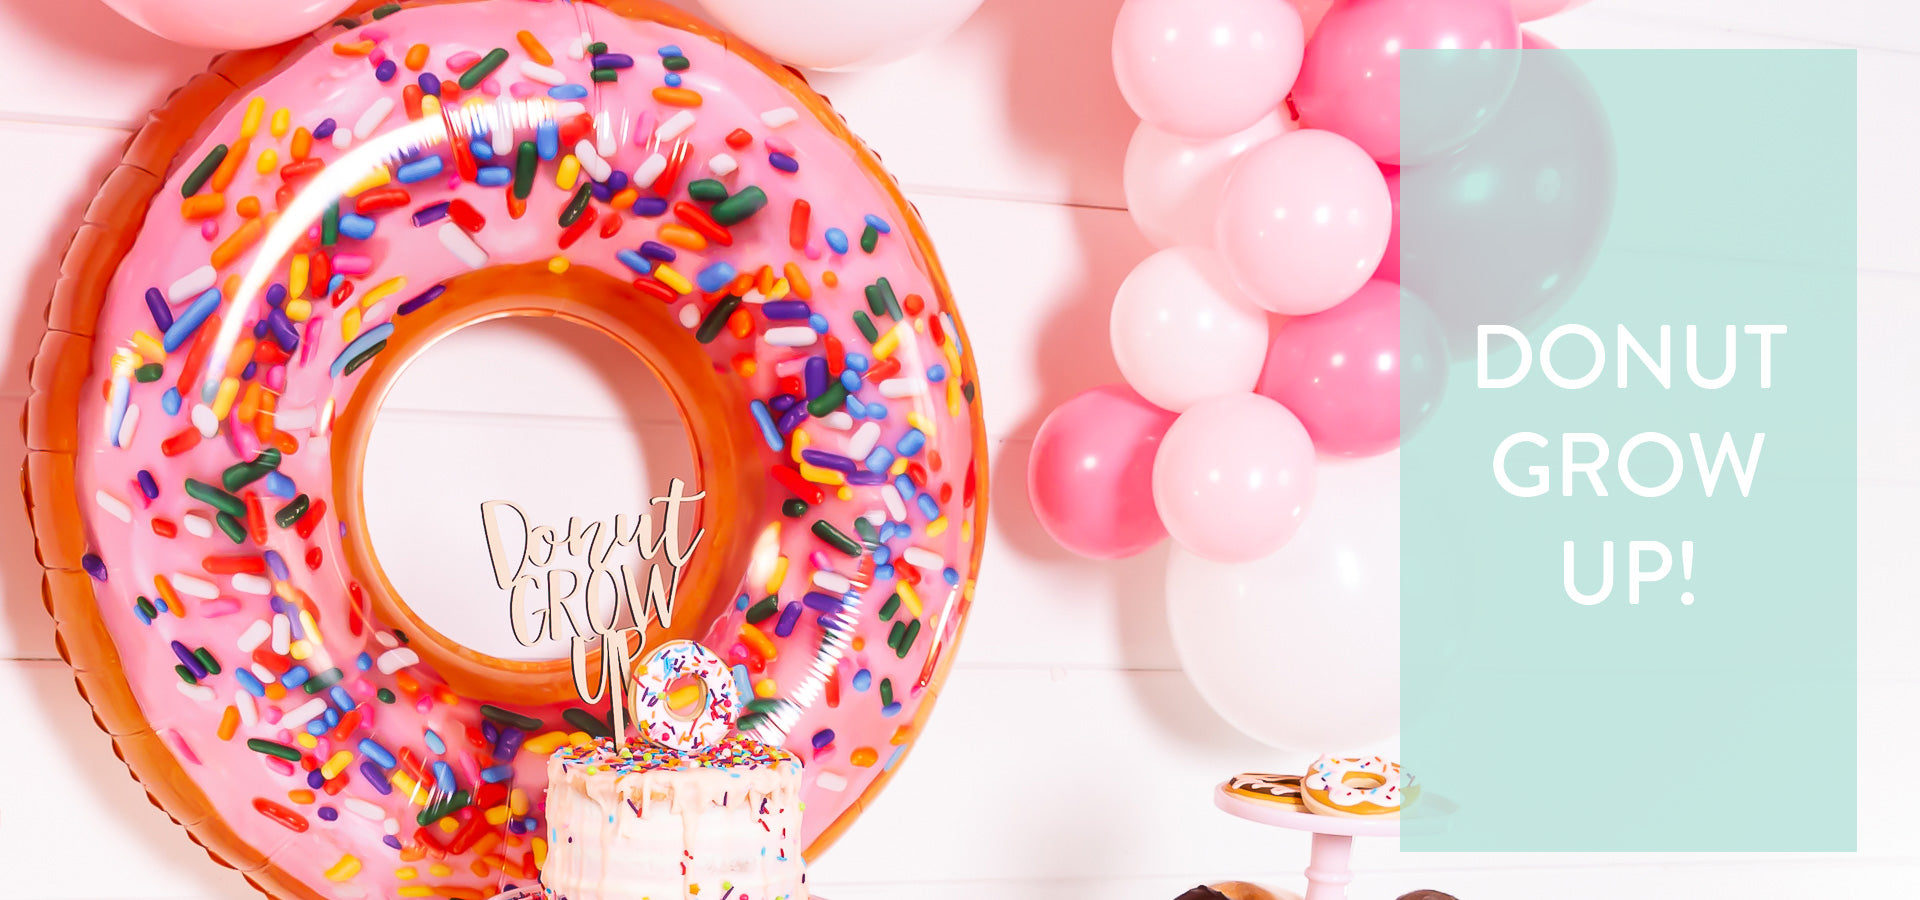 Donut Grow up party inspiration blog